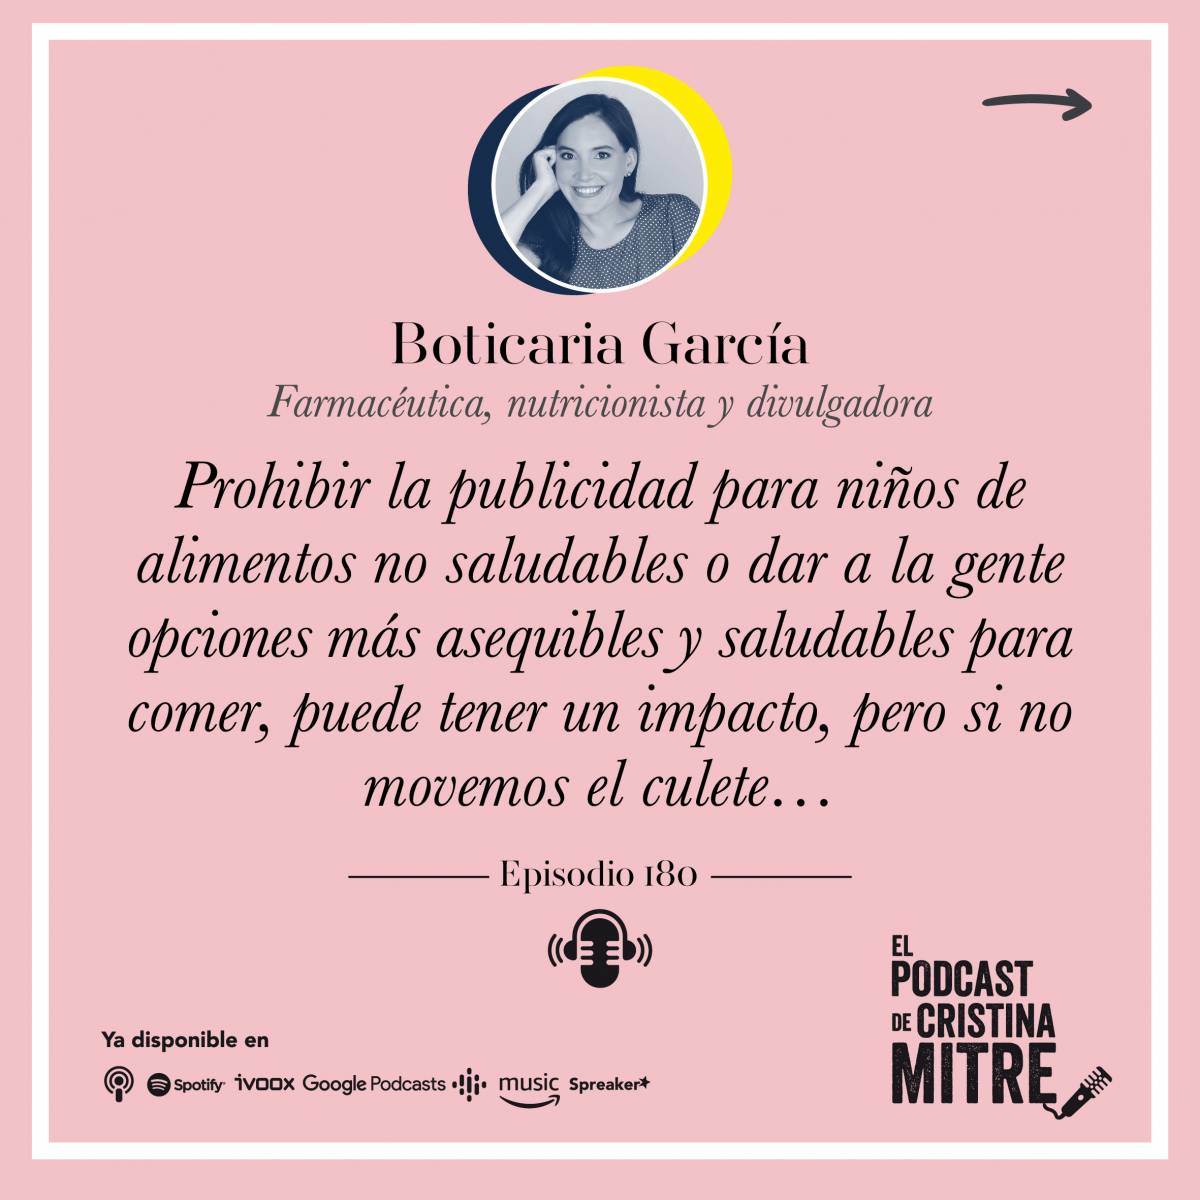 El Podcast de Cristina Mitre Boticaria García ultraprocesados